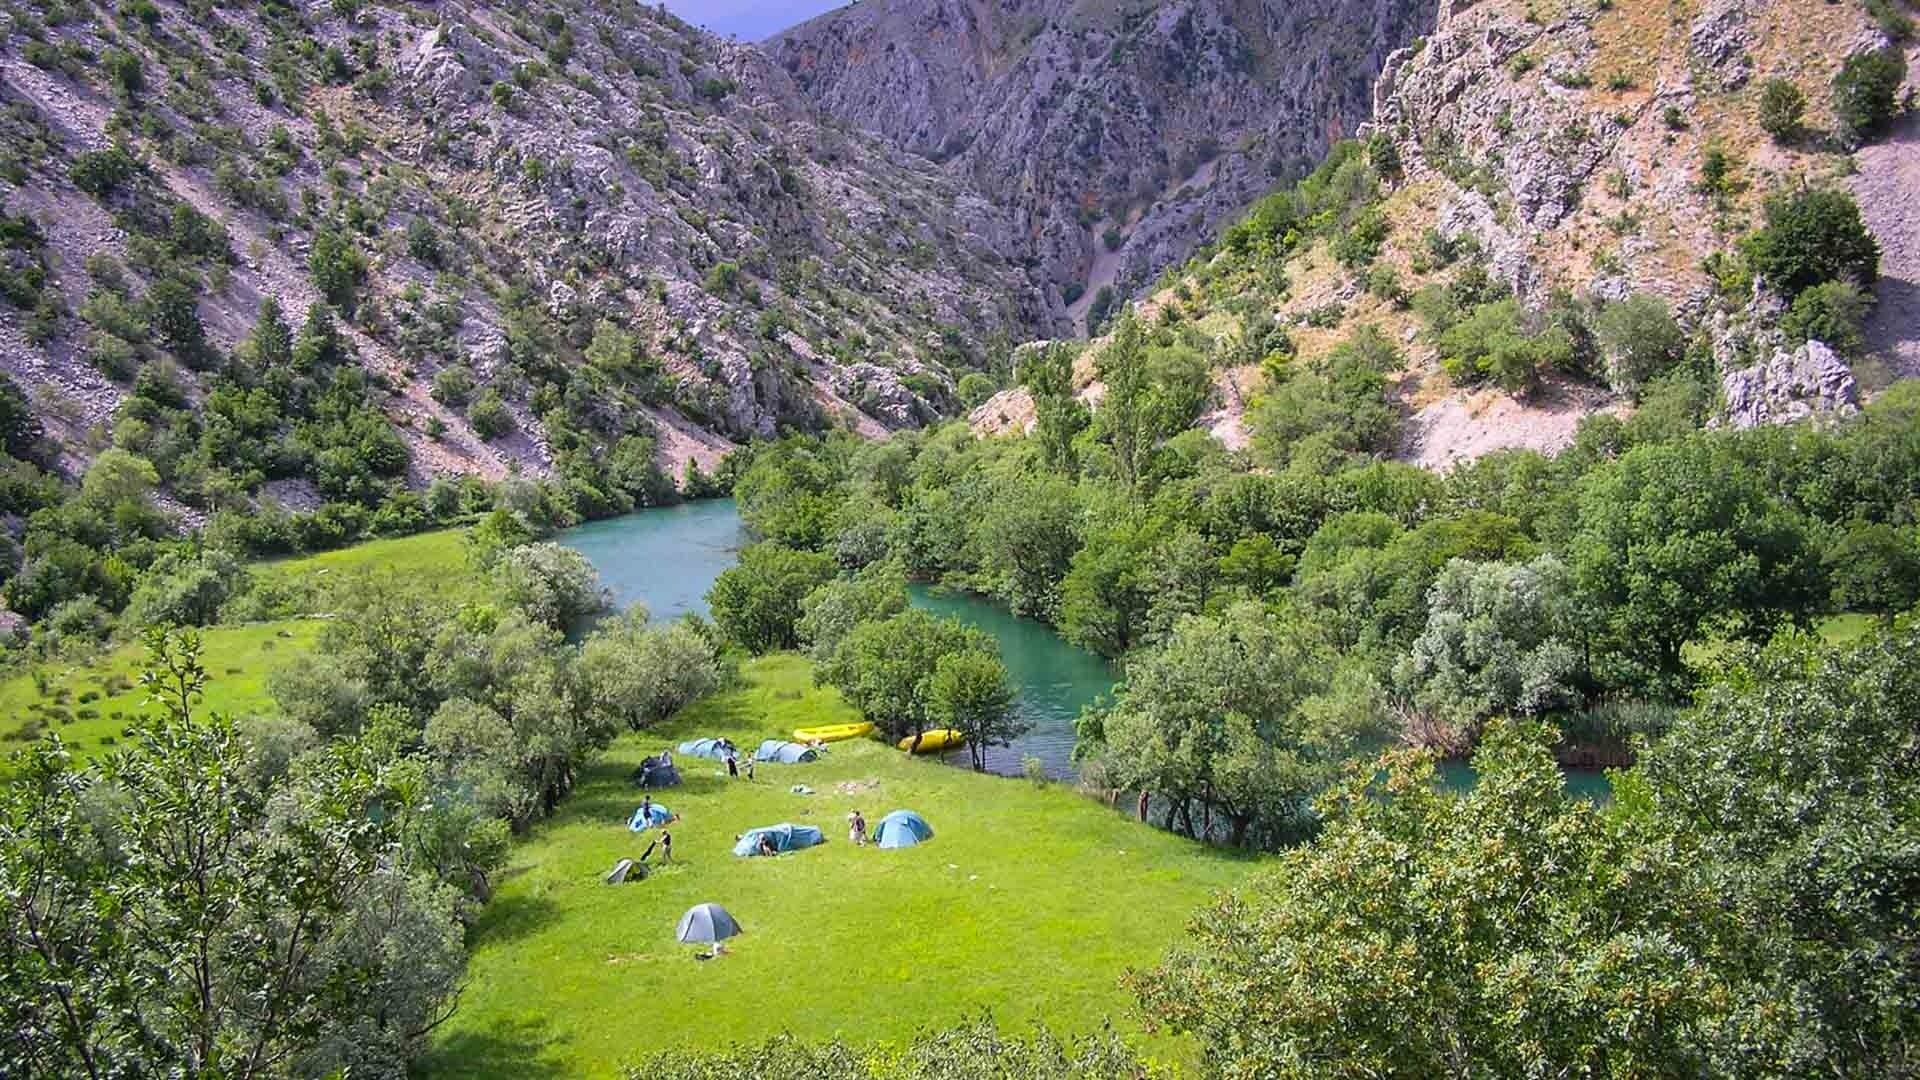 Wild Camping along the Zrmanja River, Croatia